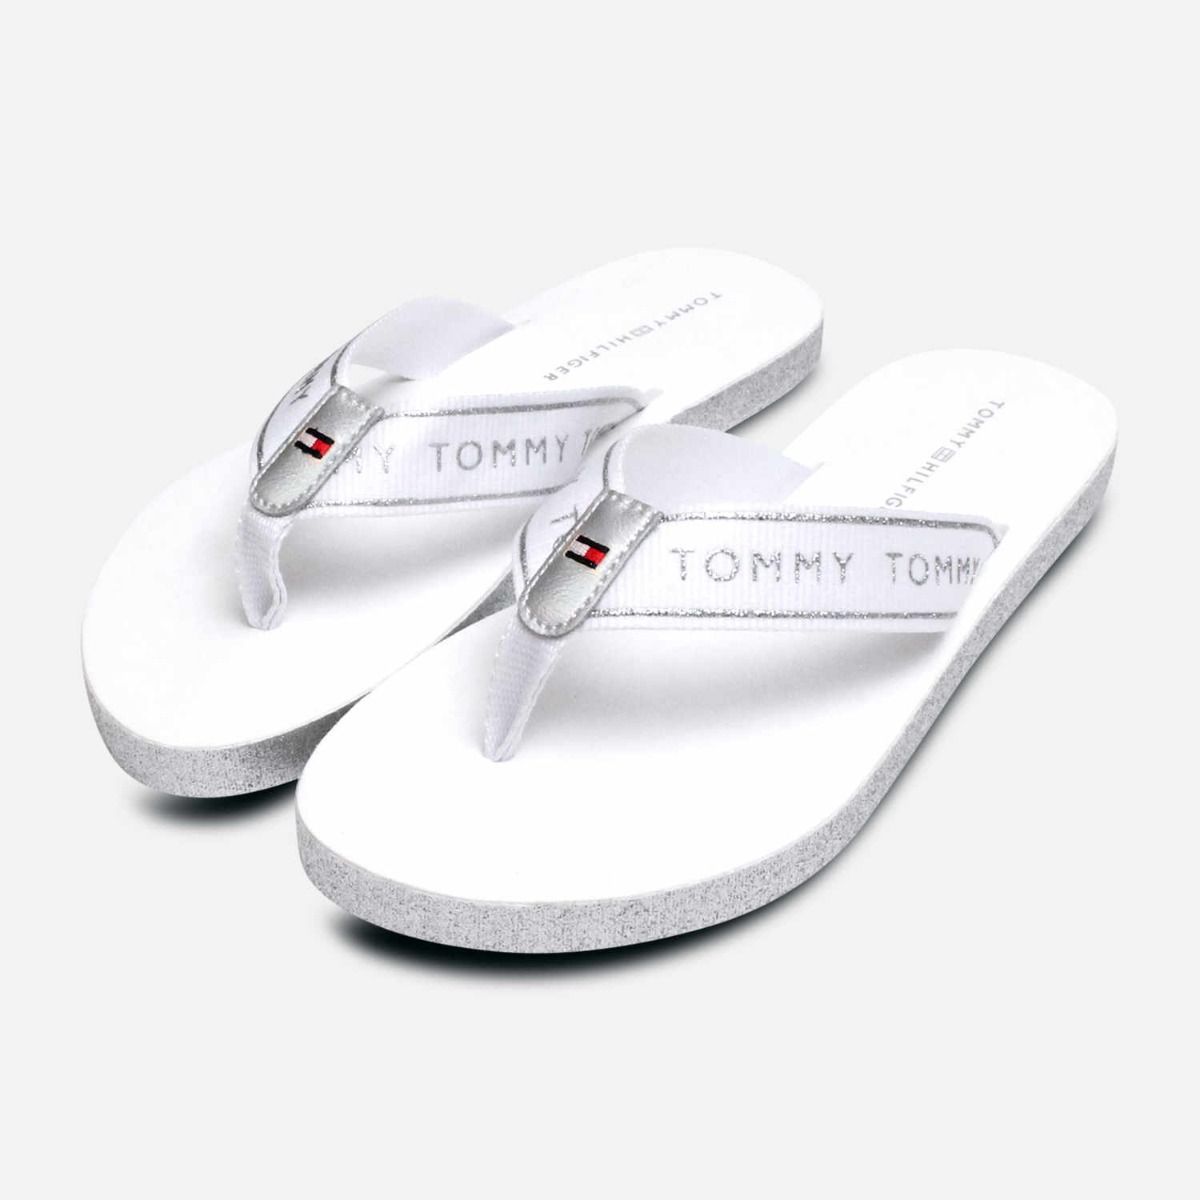 tommy hilfiger silver sandals